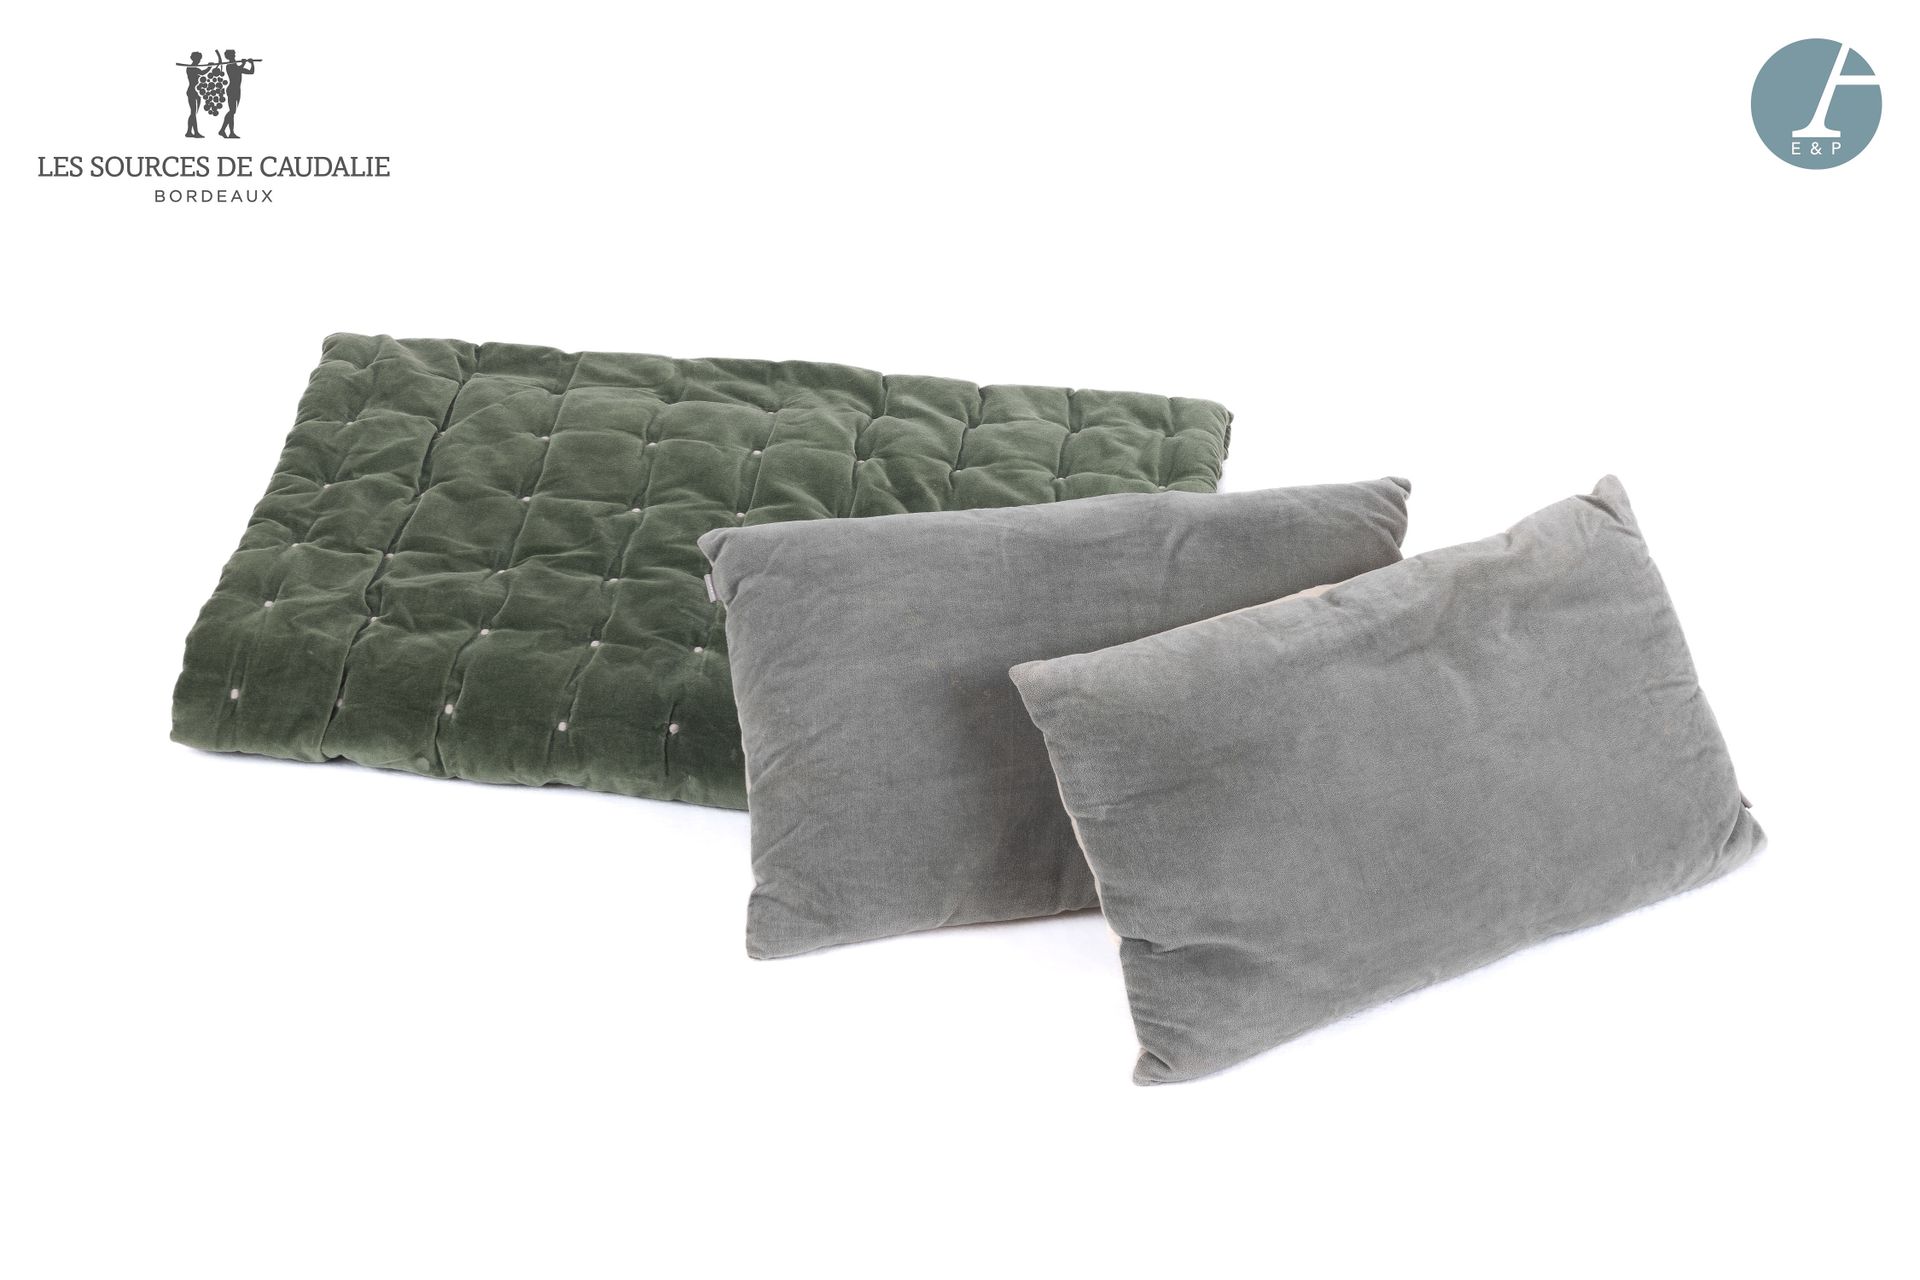 Null 来自卡达里资源公司（Grange à Bateaux）。
床组包括两个绿色和灰色天鹅绒的靠垫和一个绿色天鹅绒的毛毯。
坐垫59x35厘米
床罩238x&hellip;